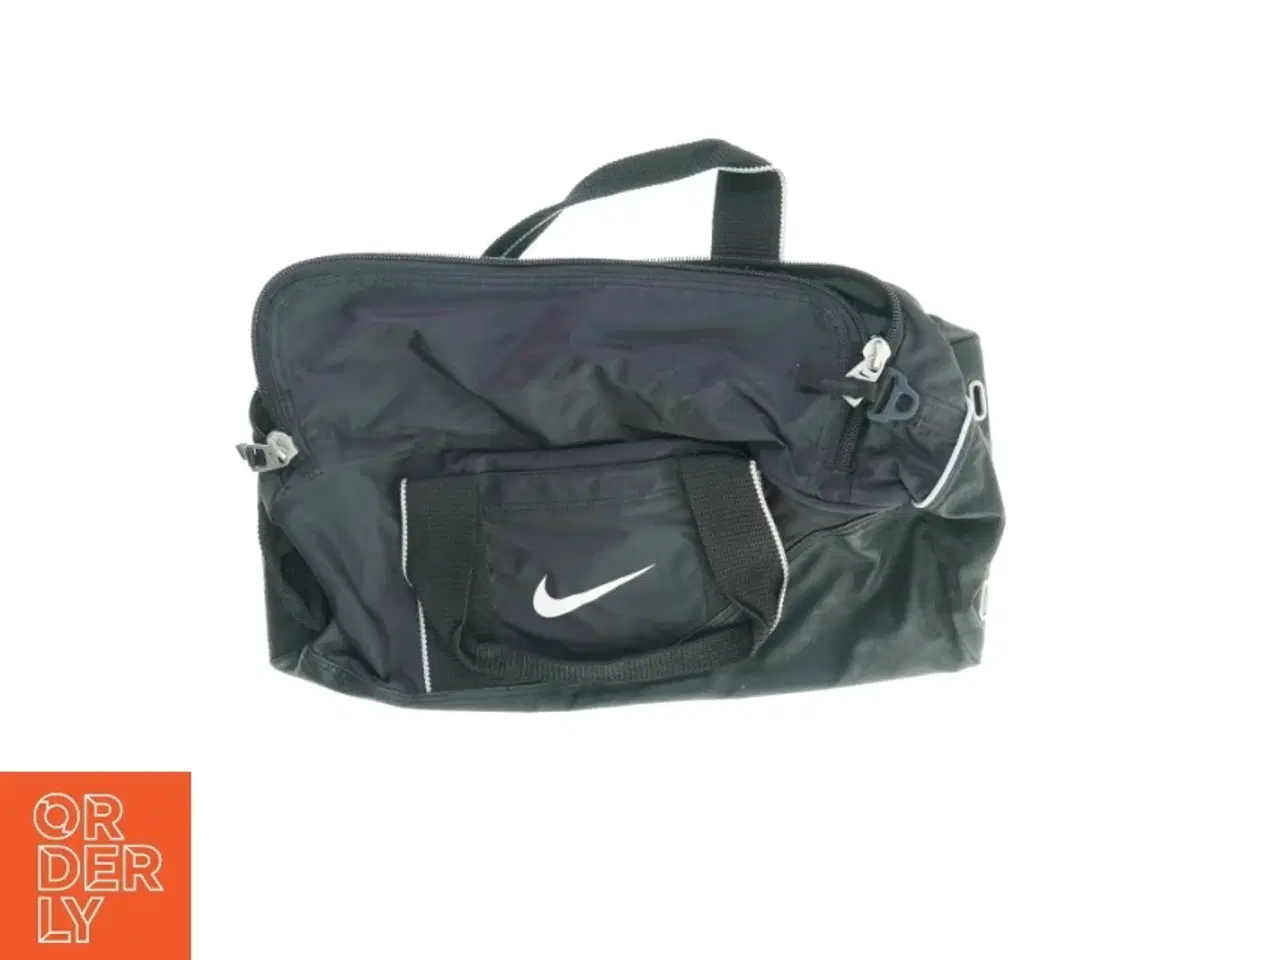 Billede 1 - Nike sportstaske fra Nike (str. 50 xn 25 cm)